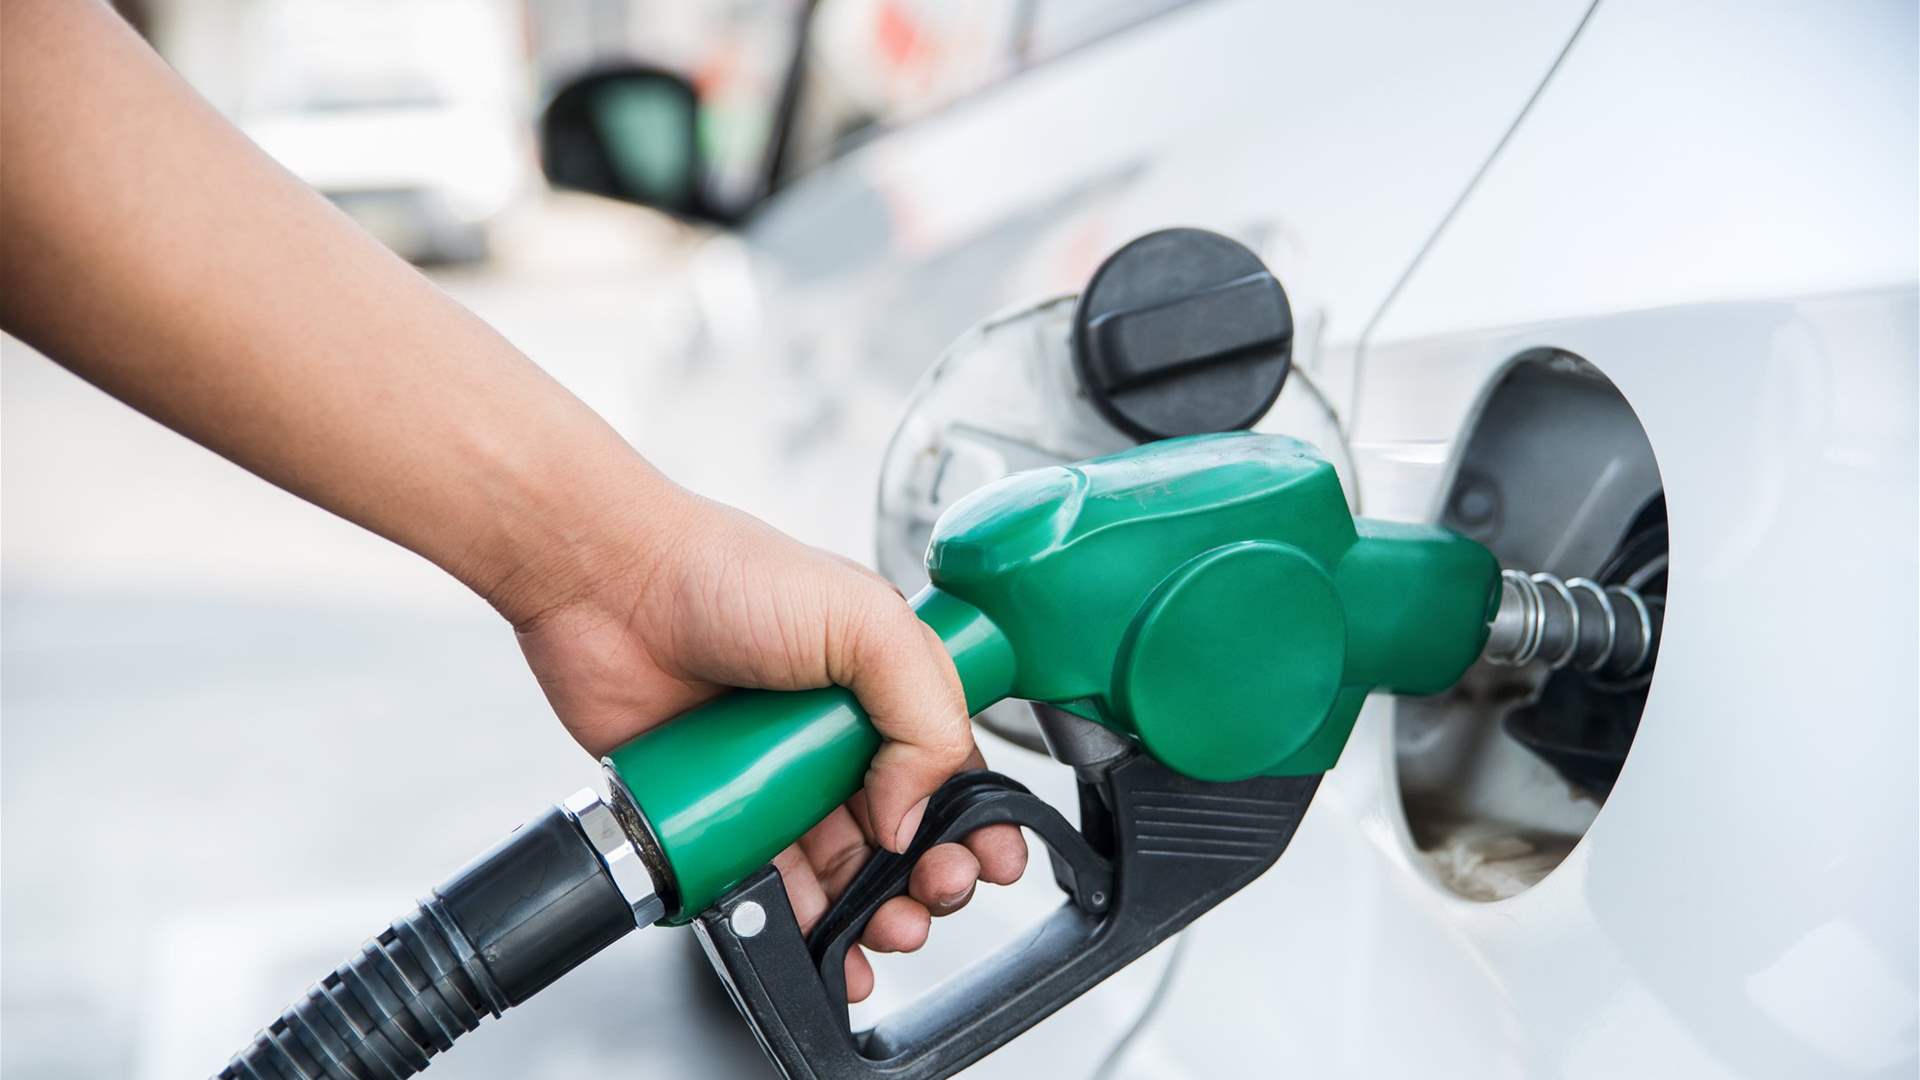 Fuel prices decrease again across Lebanon